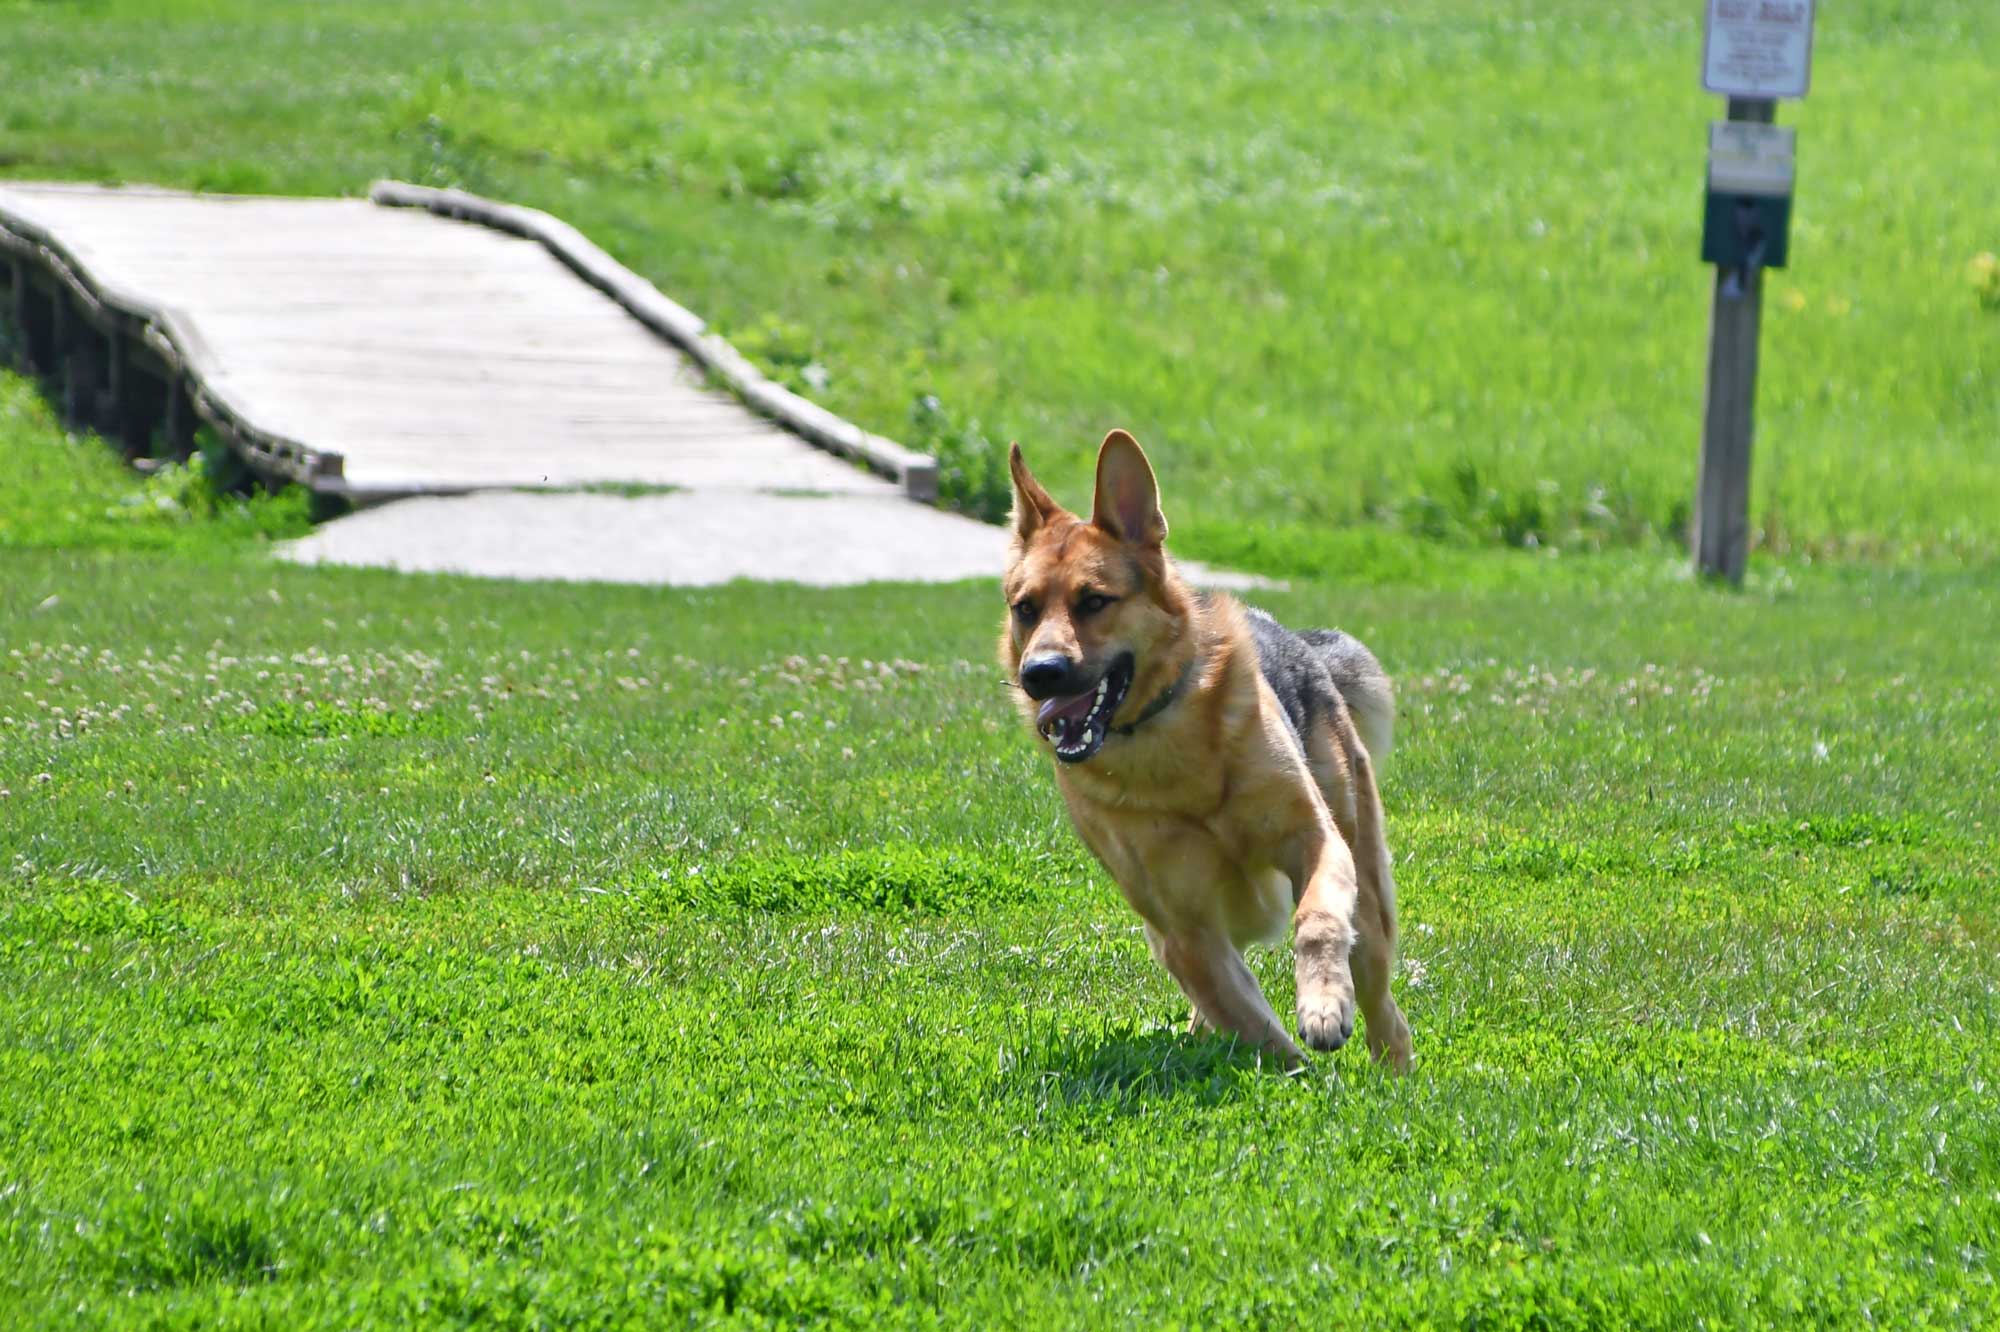 A dog runs through the grass at a dog park.